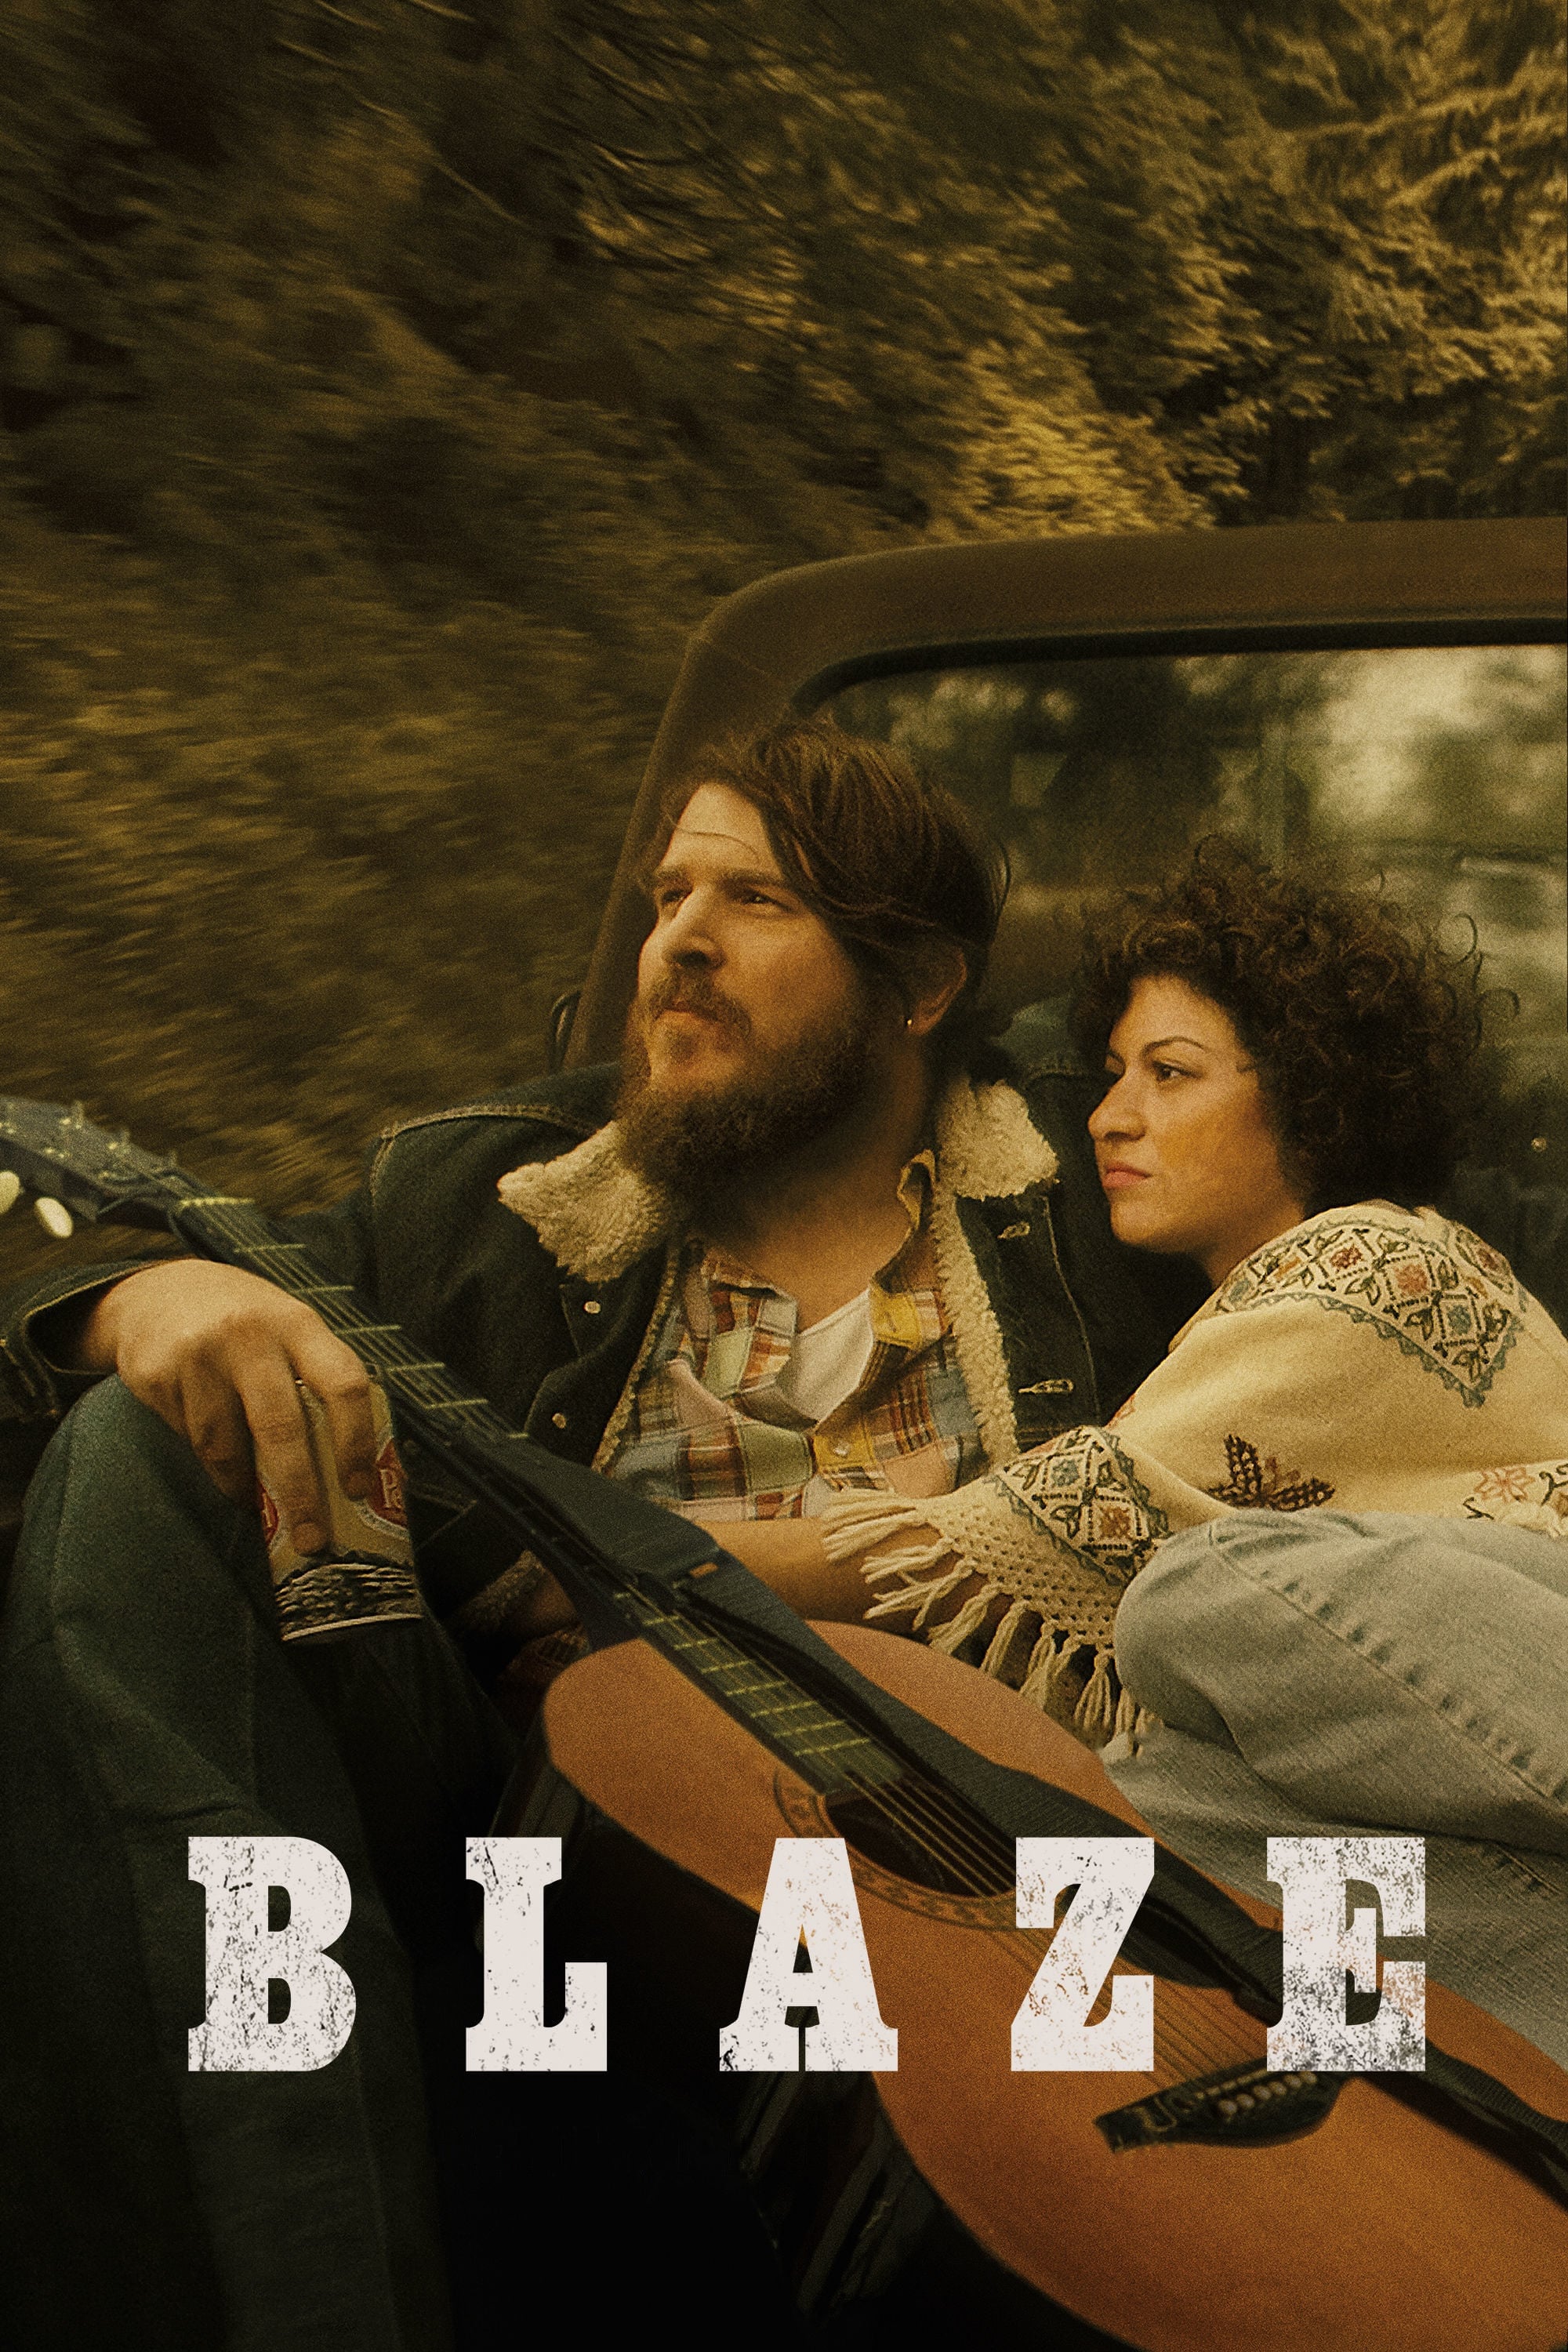 Blaze (2018)